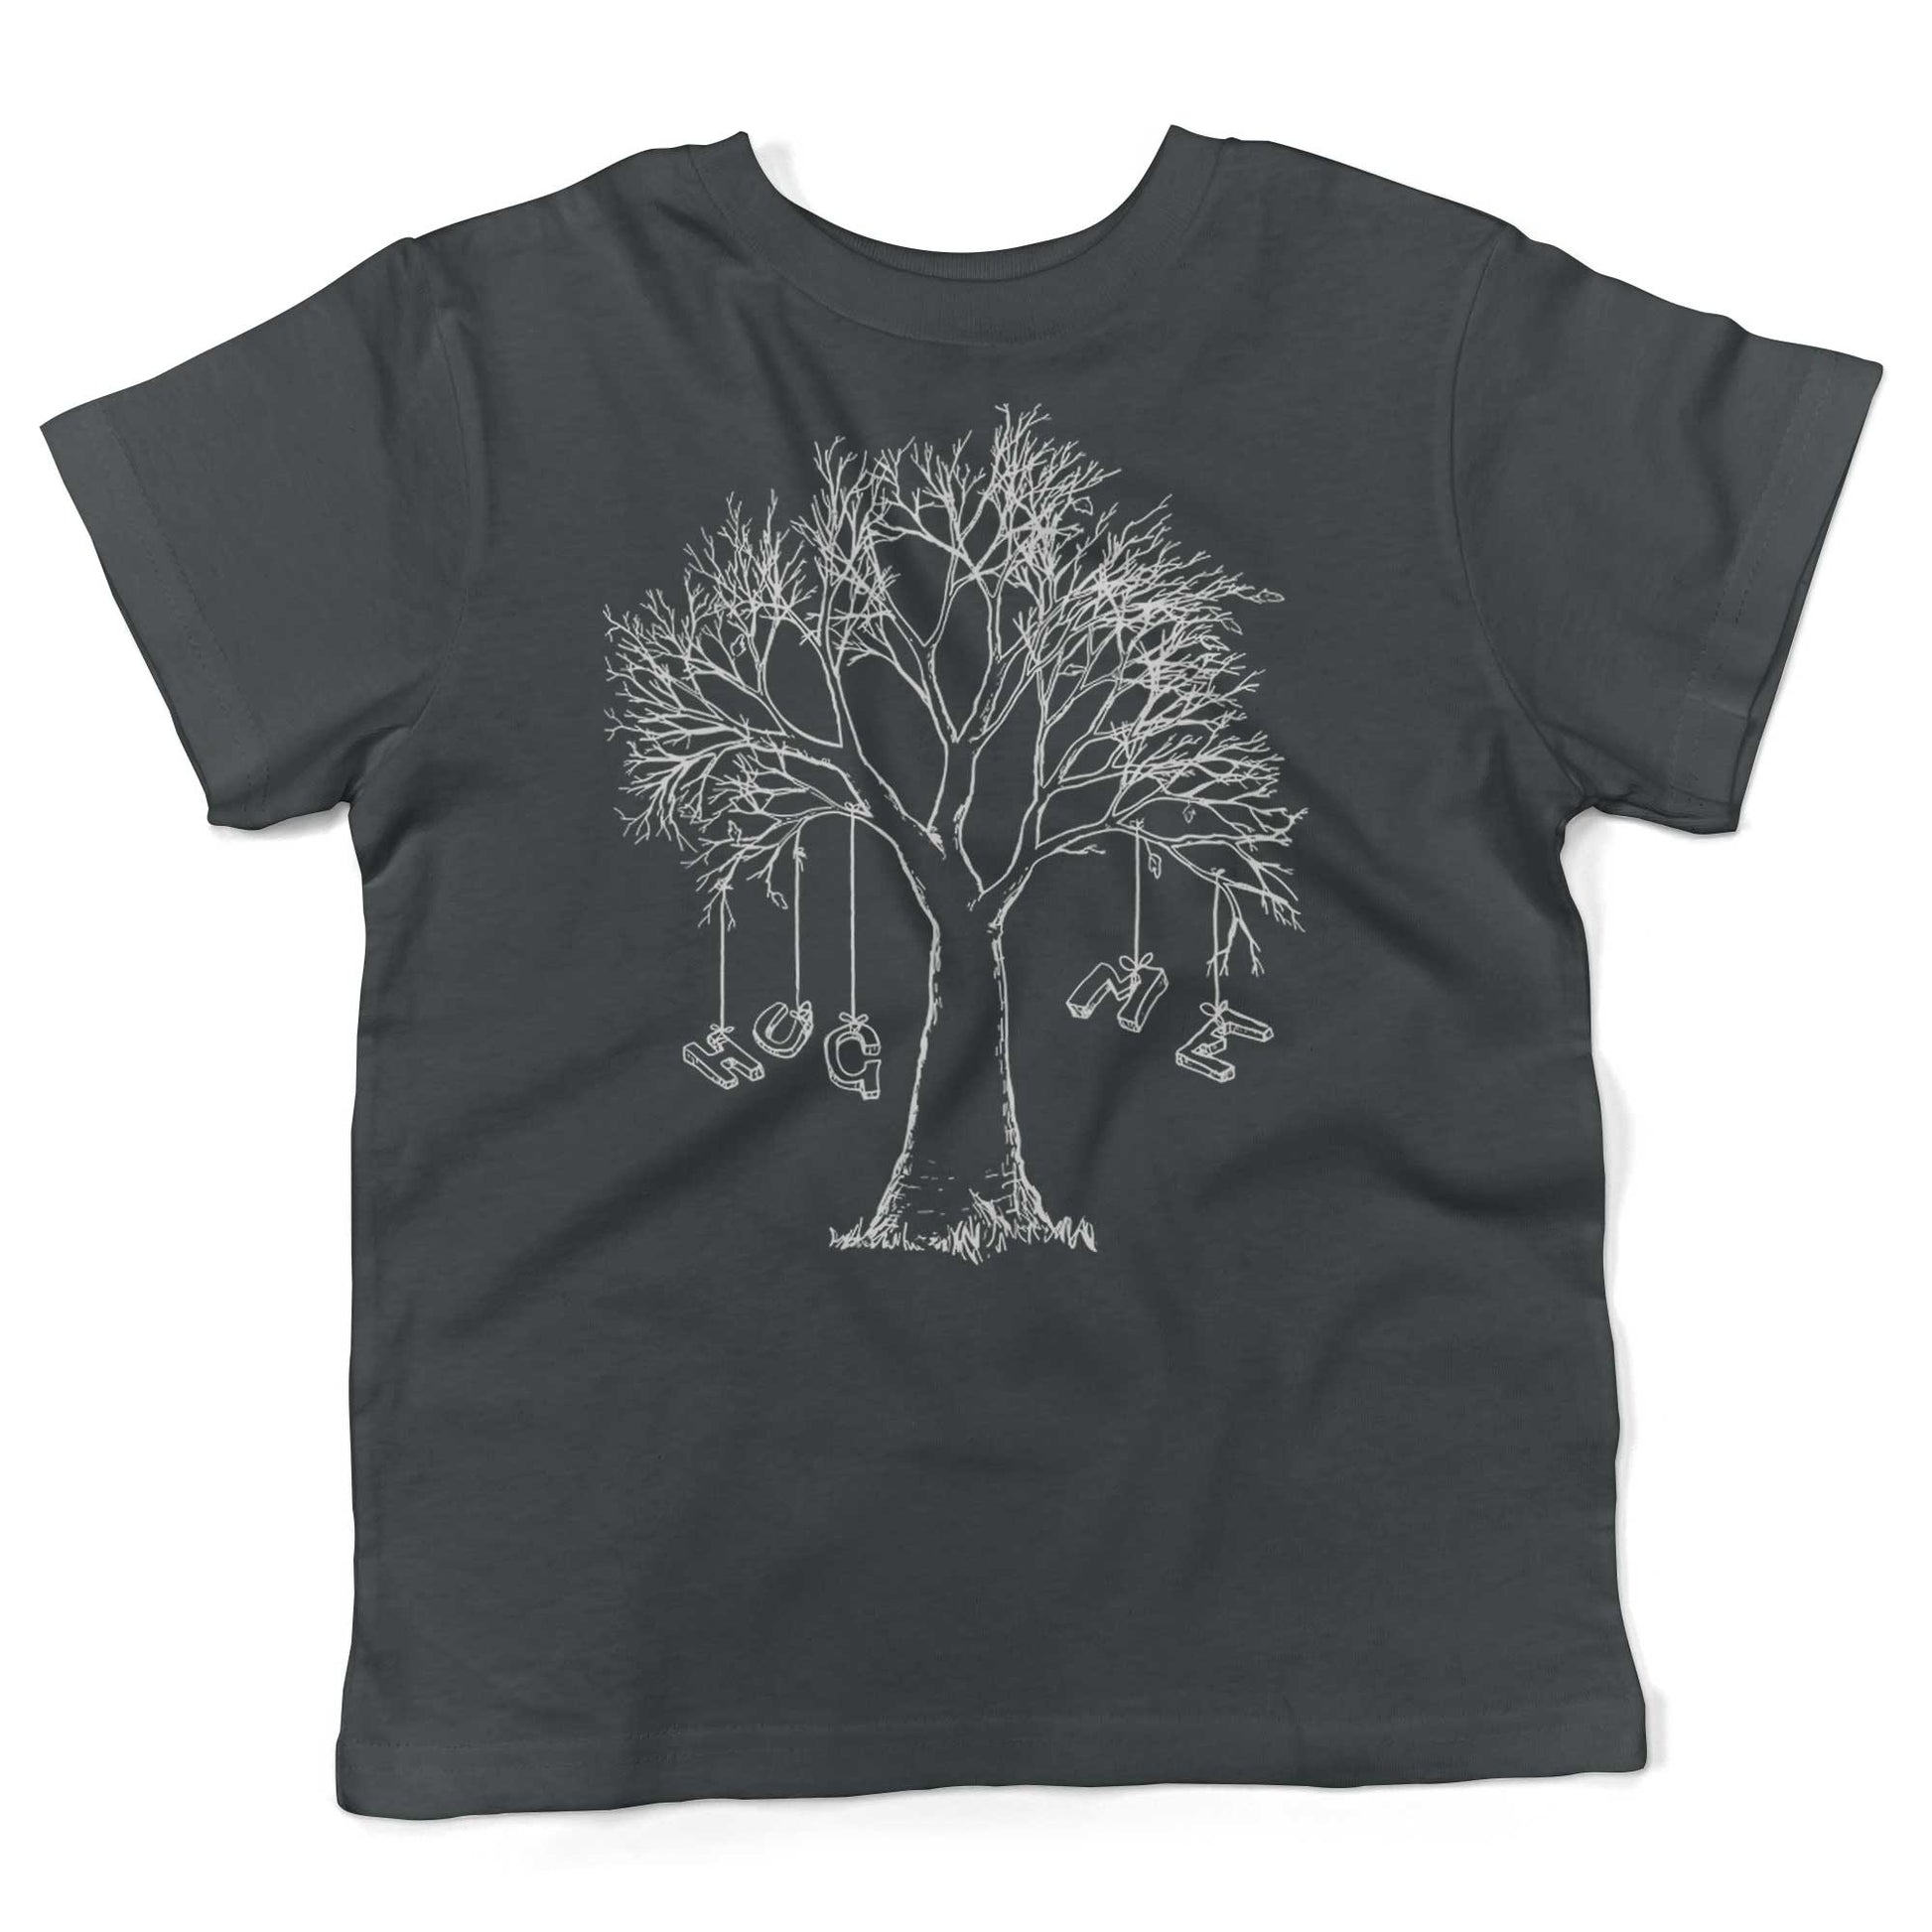 Hug A Tree Toddler Shirt-Asphalt-2T